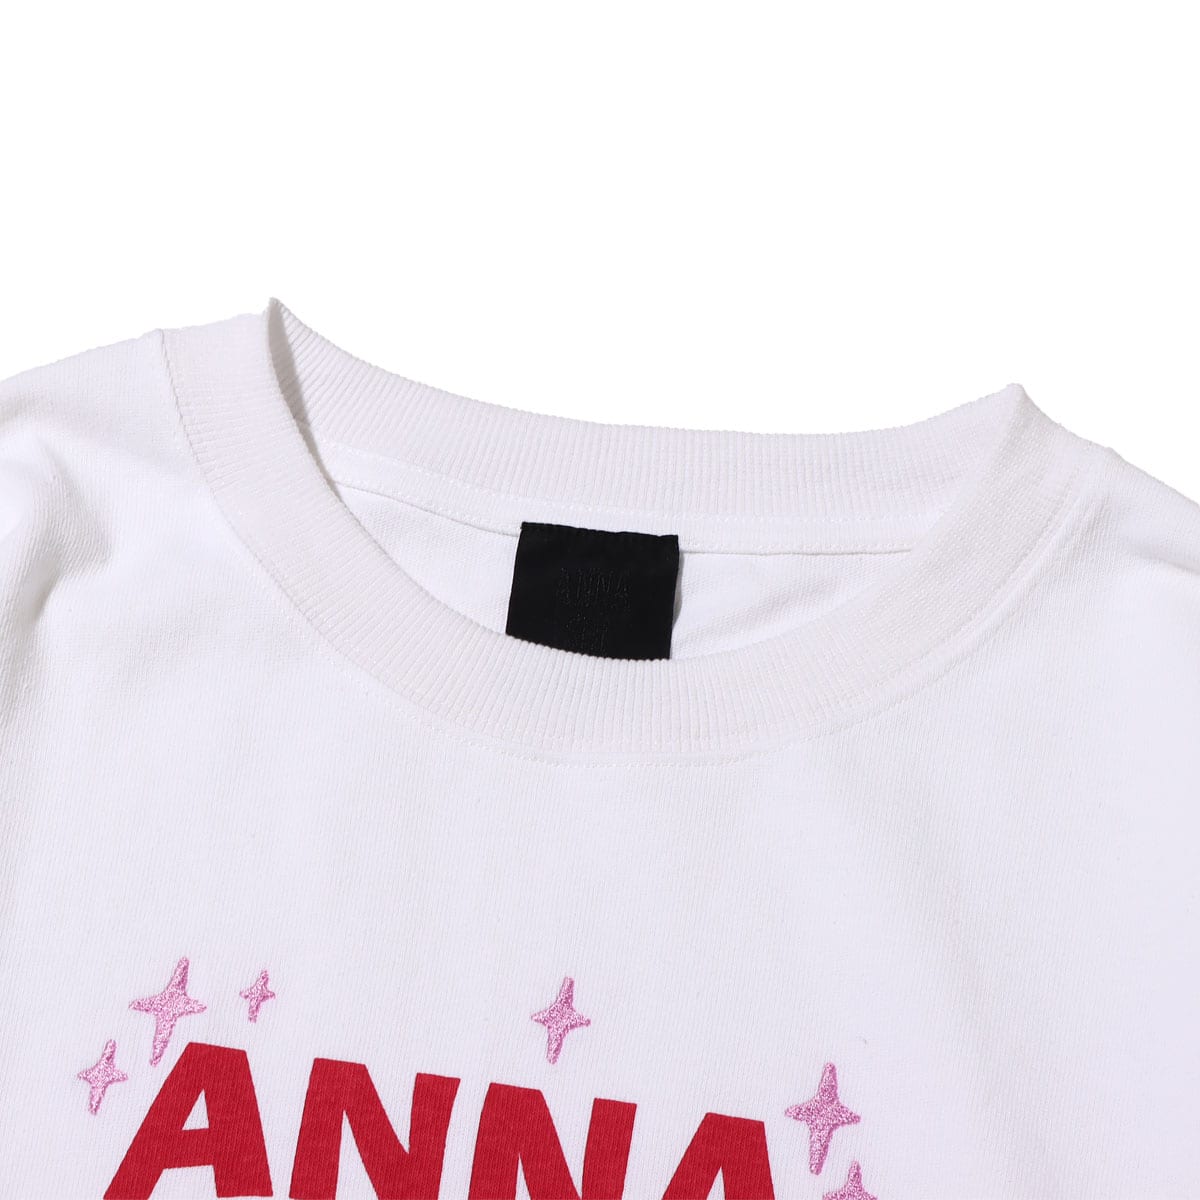 ANNA SUI Archive Y2K風ロゴ ロンT WHITE 22SU-I